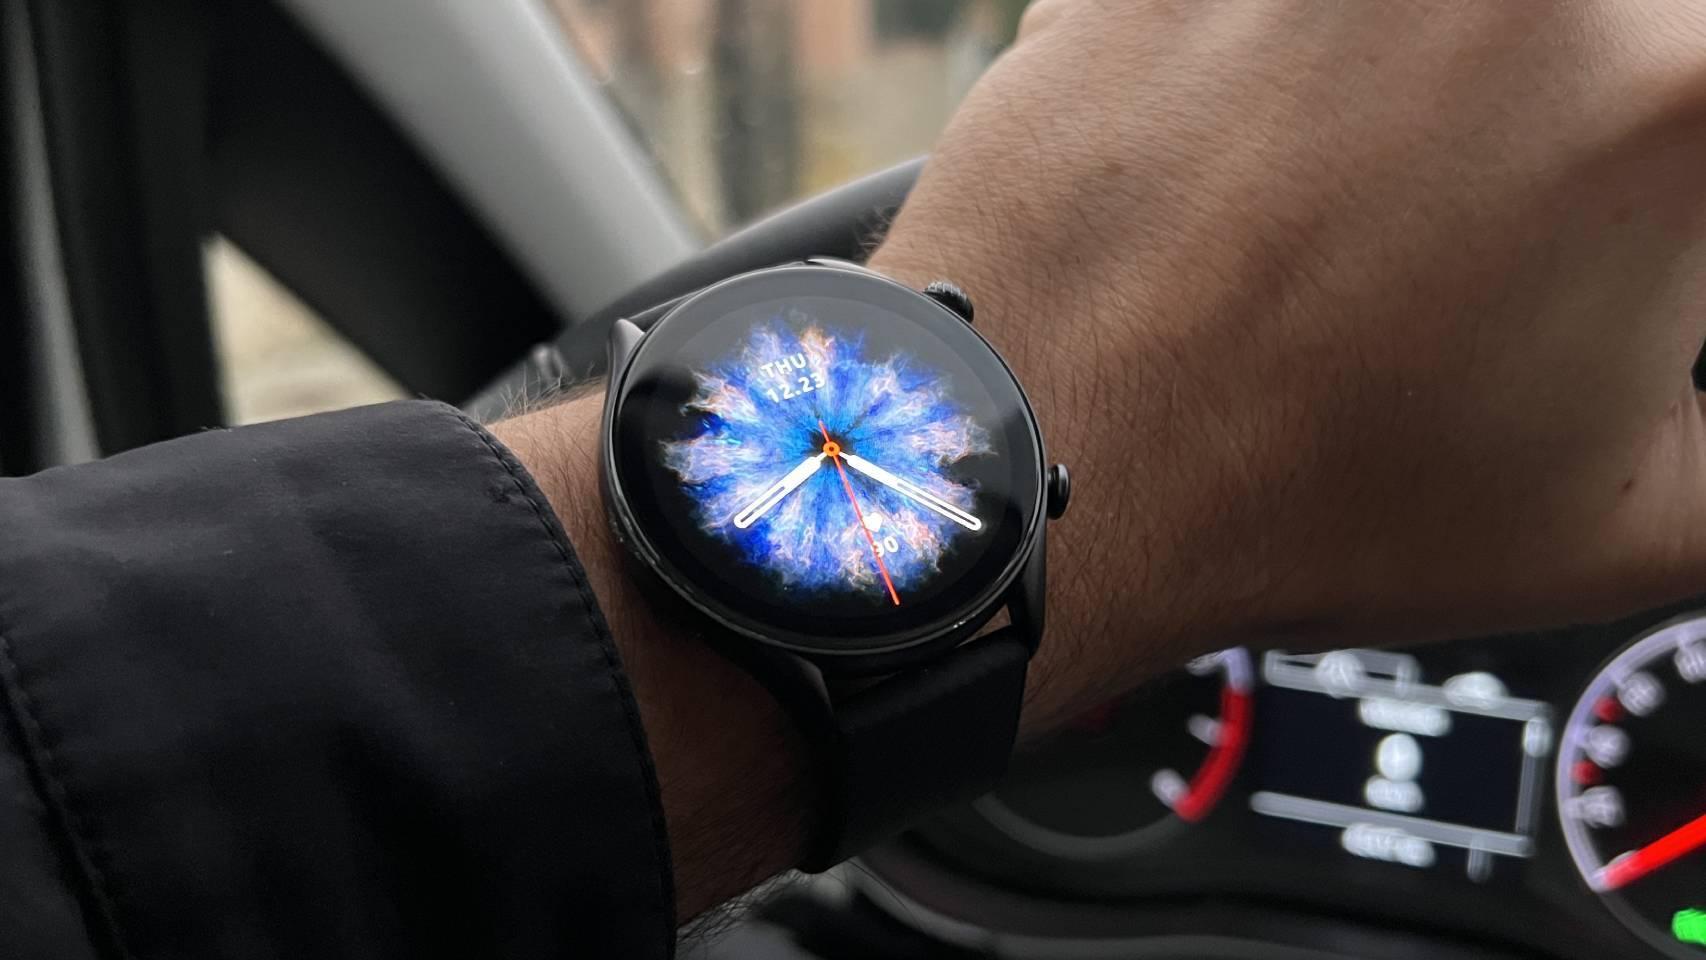 Amazfit GTR 3 Pro: así es este nuevo reloj deportivo